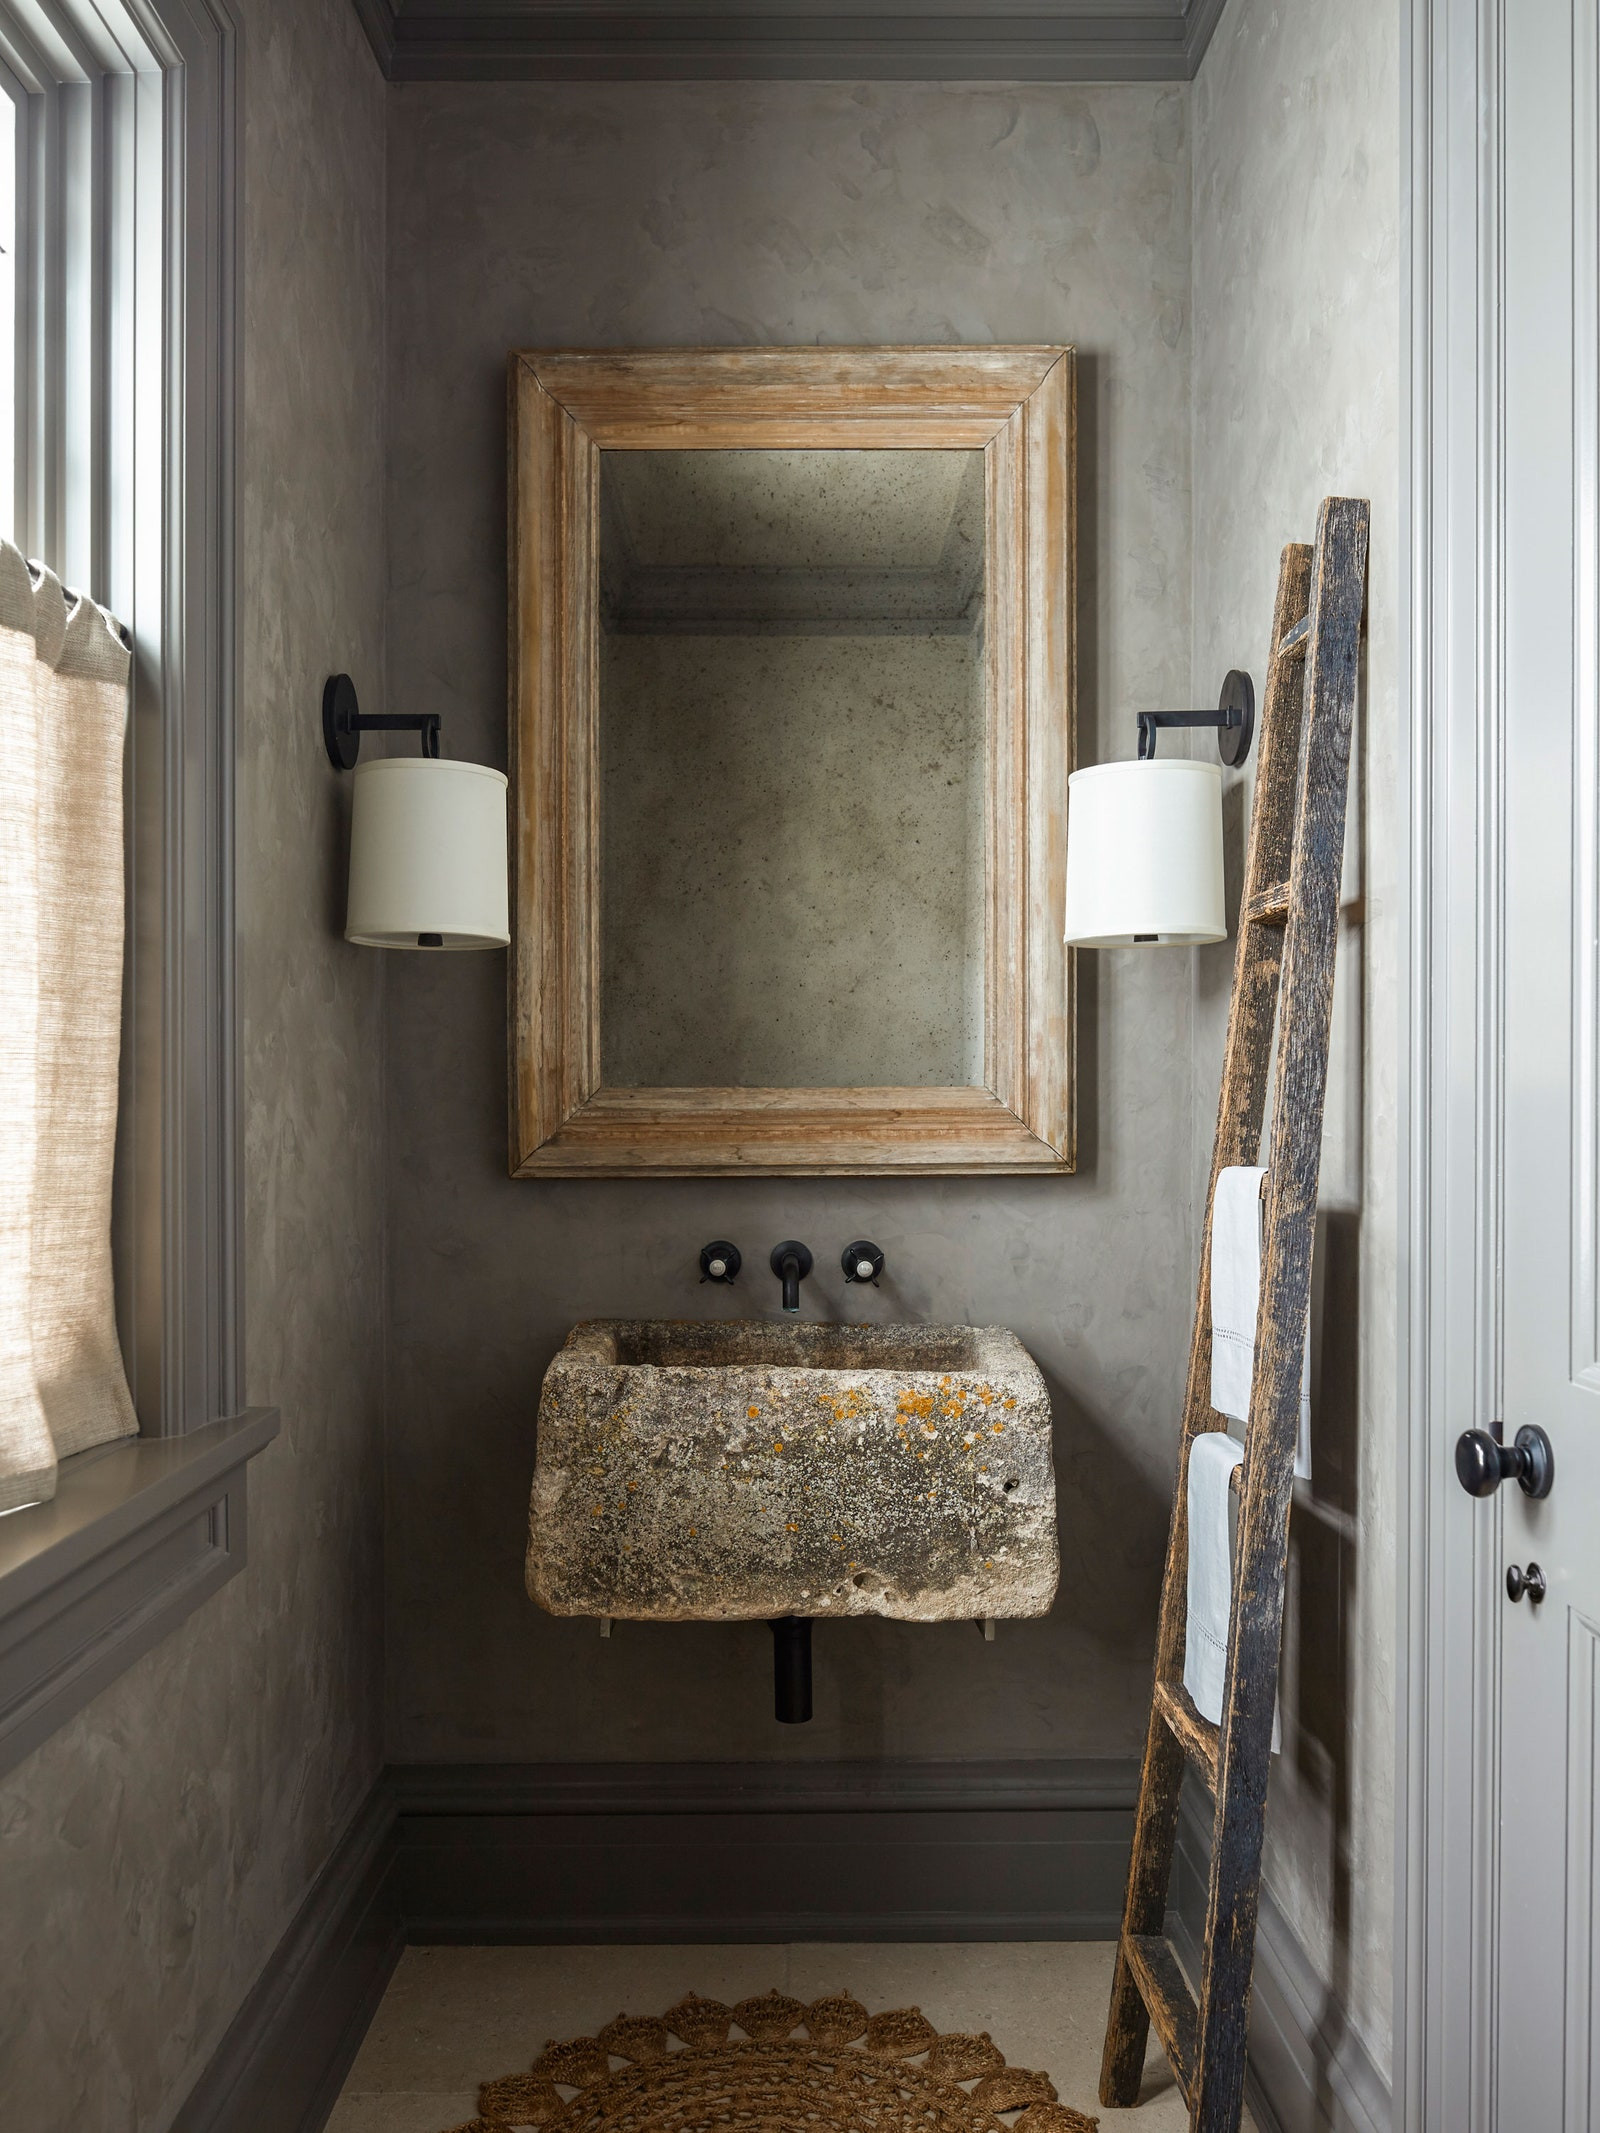 Buy Bathroom Mirror
 12 Bathroom Mirror Ideas for Every Style